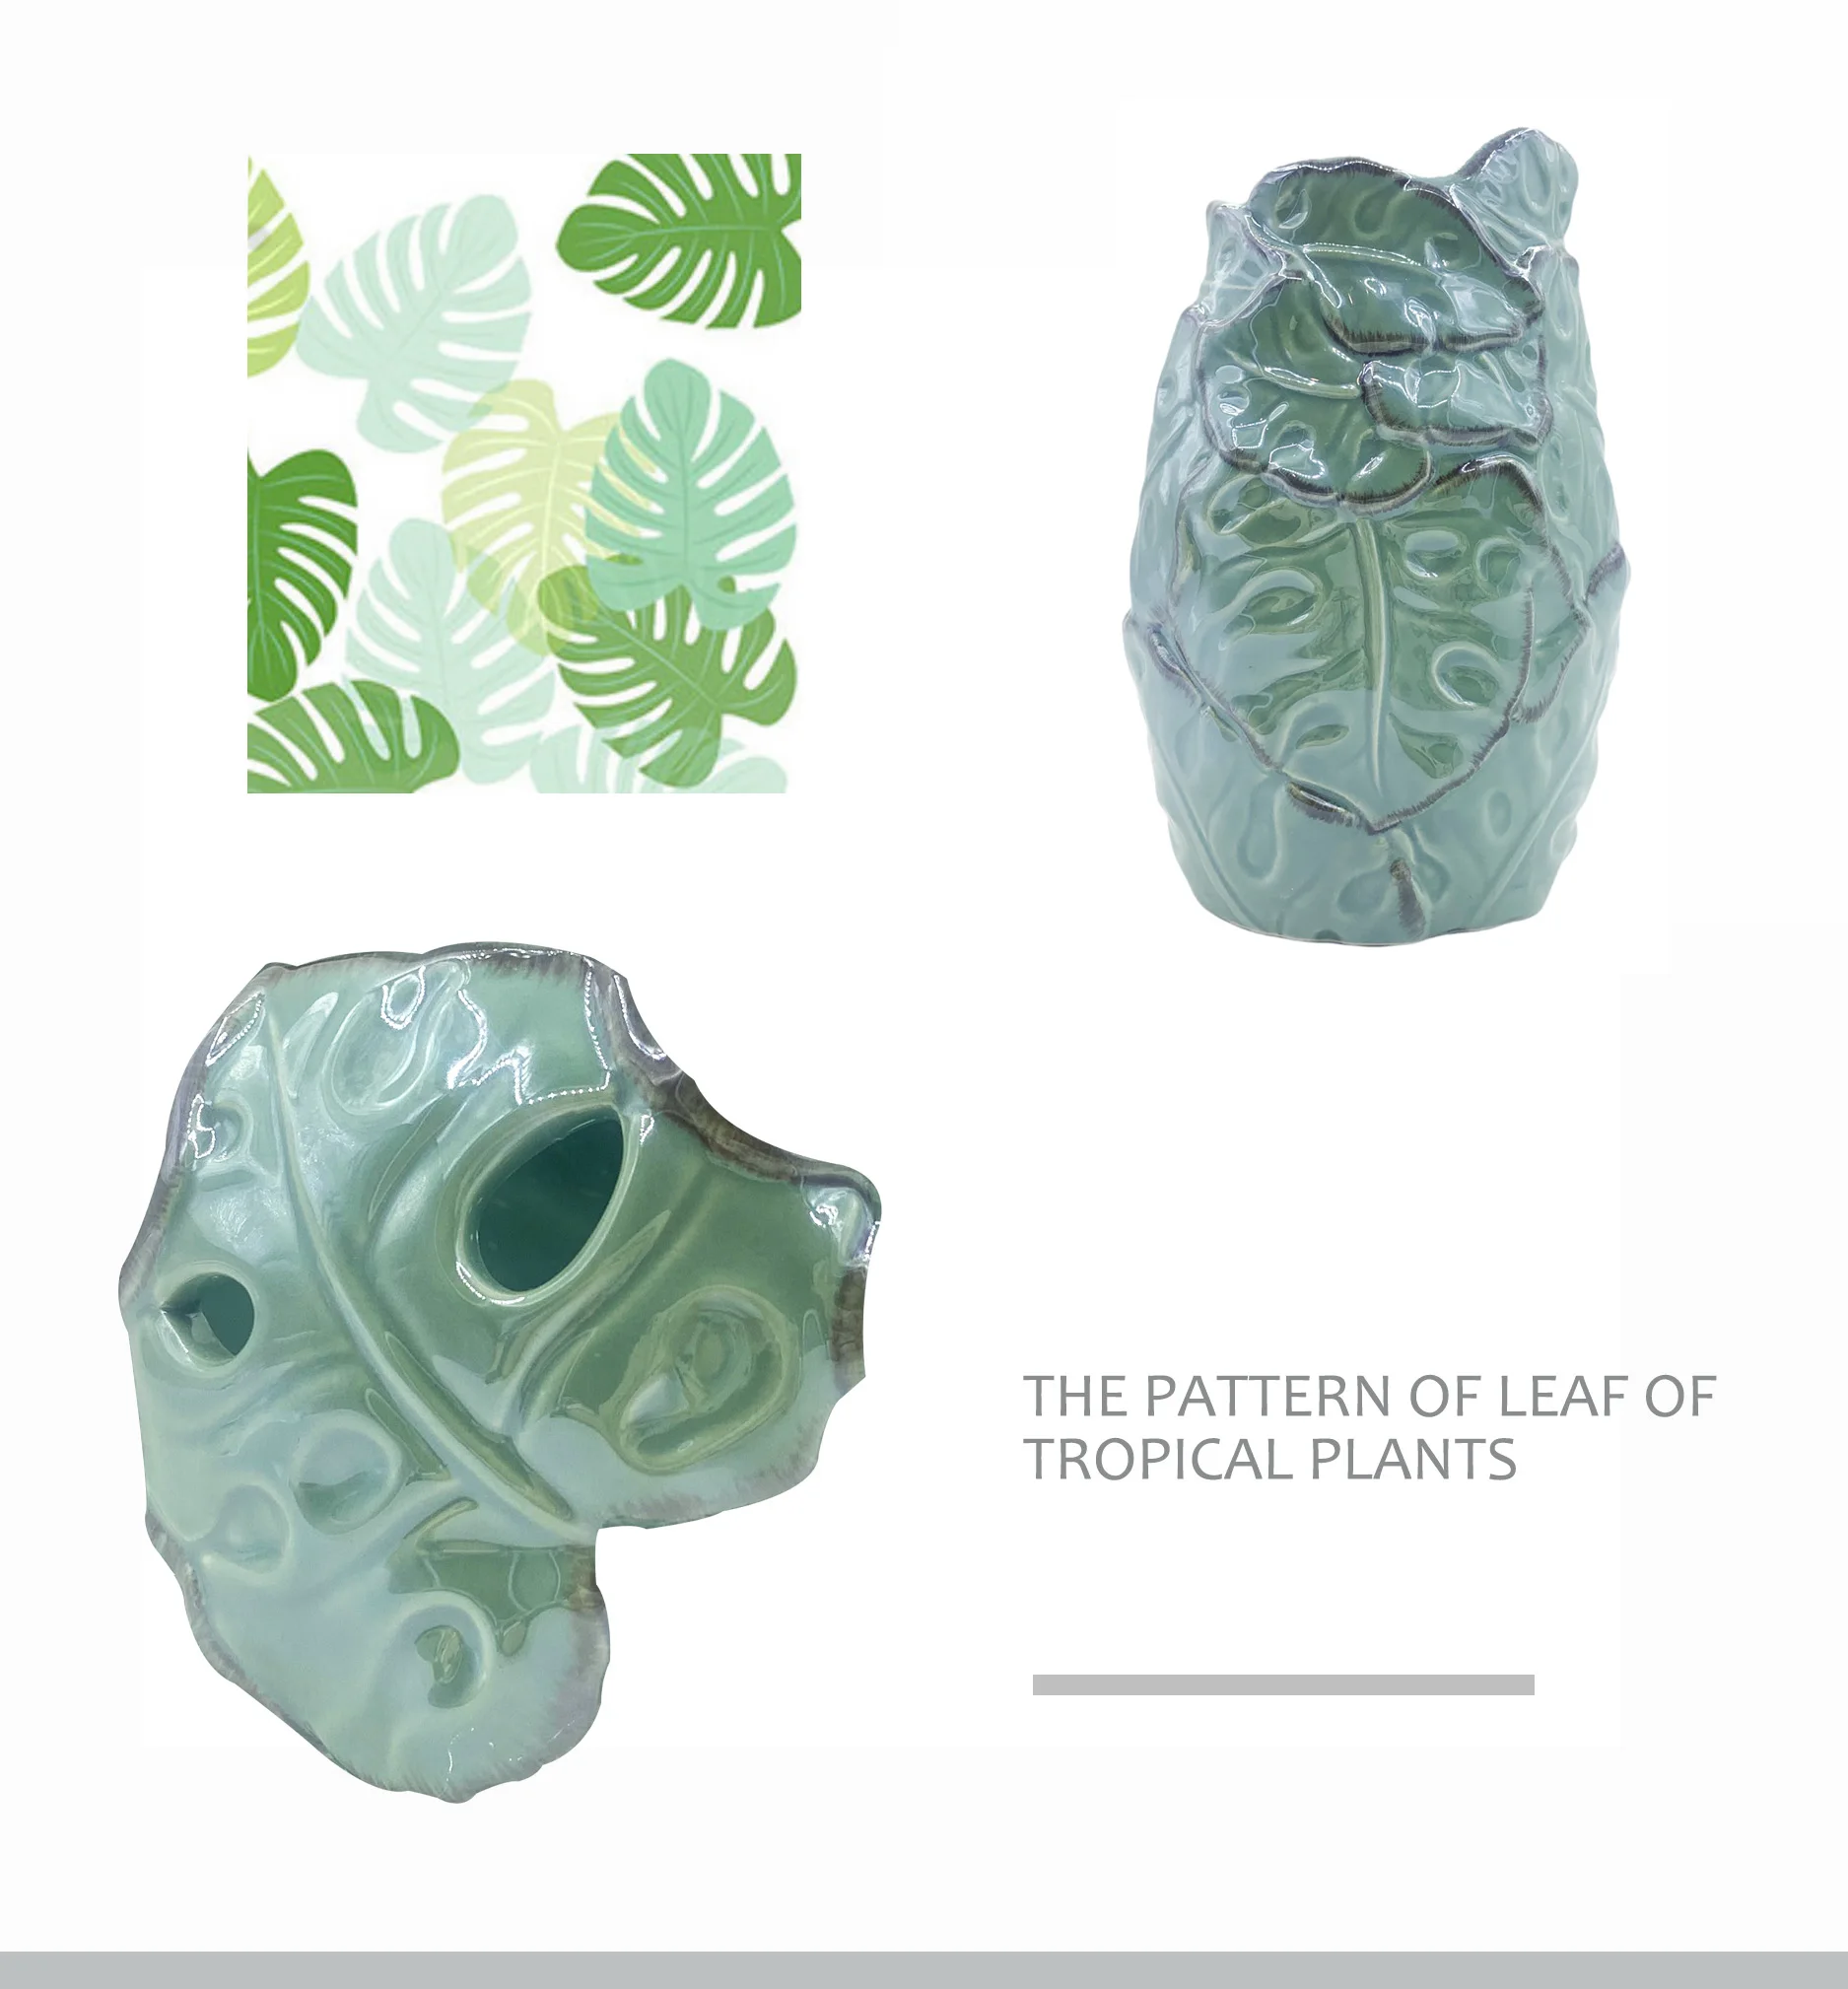 Home Goods Decorate Tropical foliag Design Ceramic Flower Vase Wholesale three color Porcelain Vase for Wedding Style